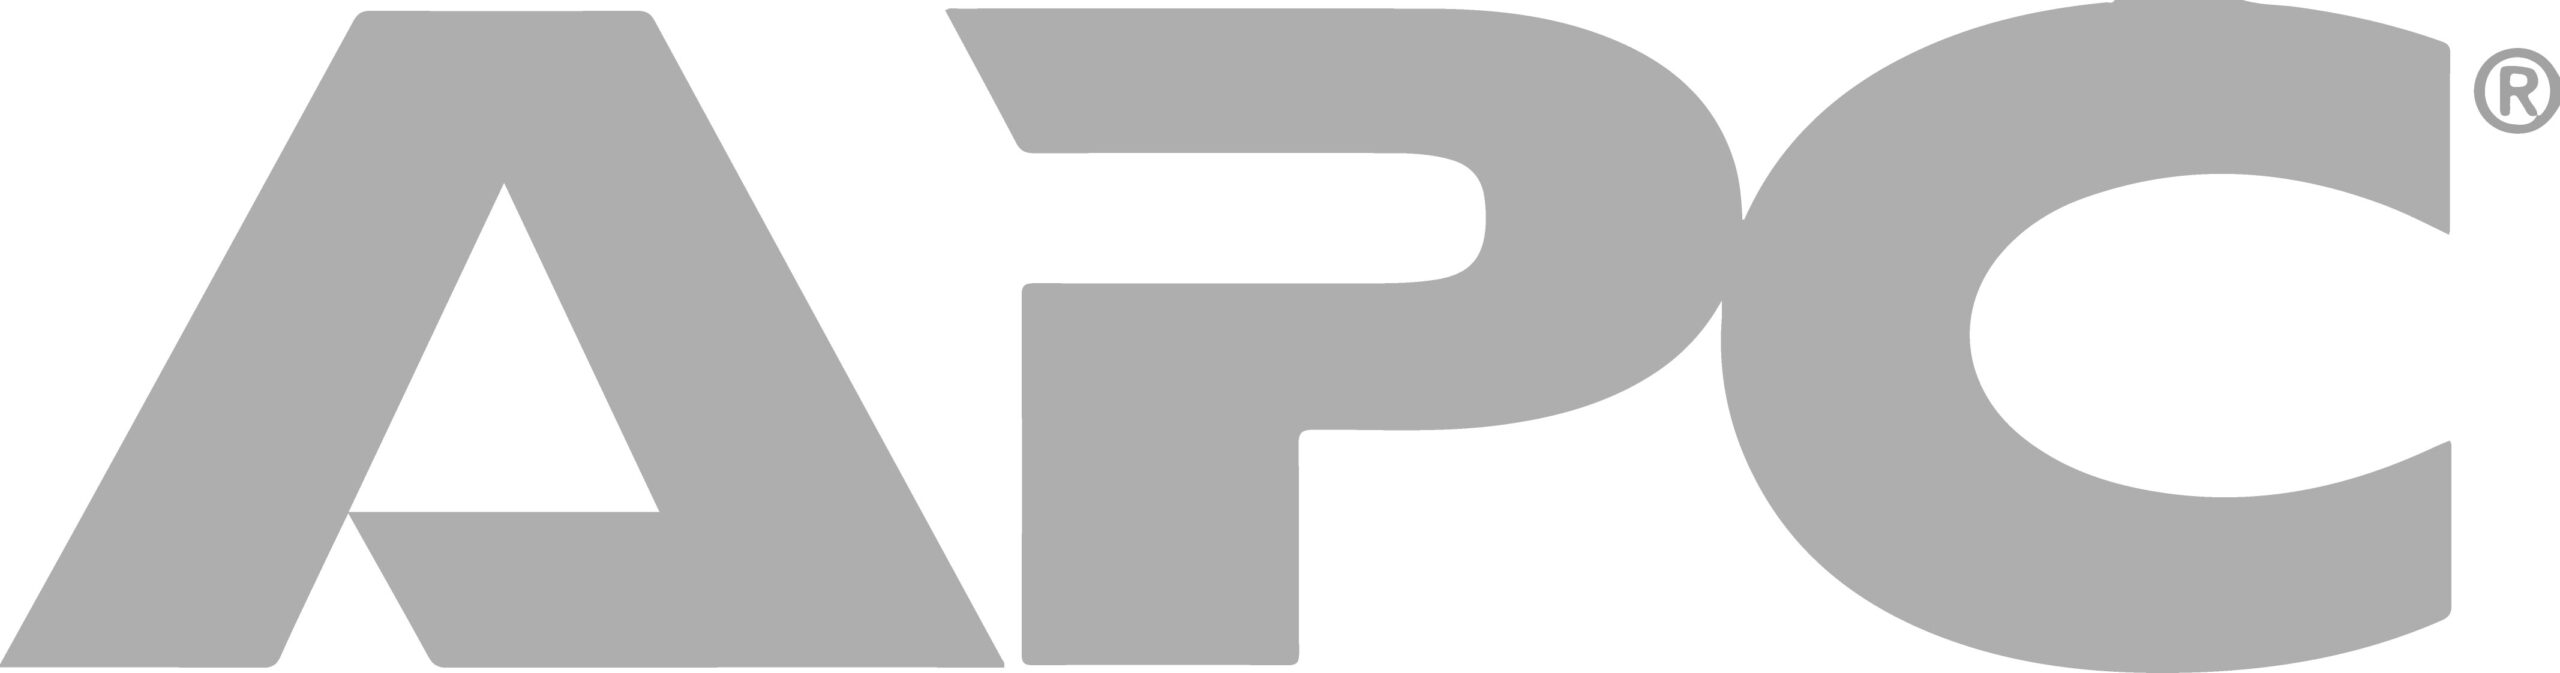 apc logo gray